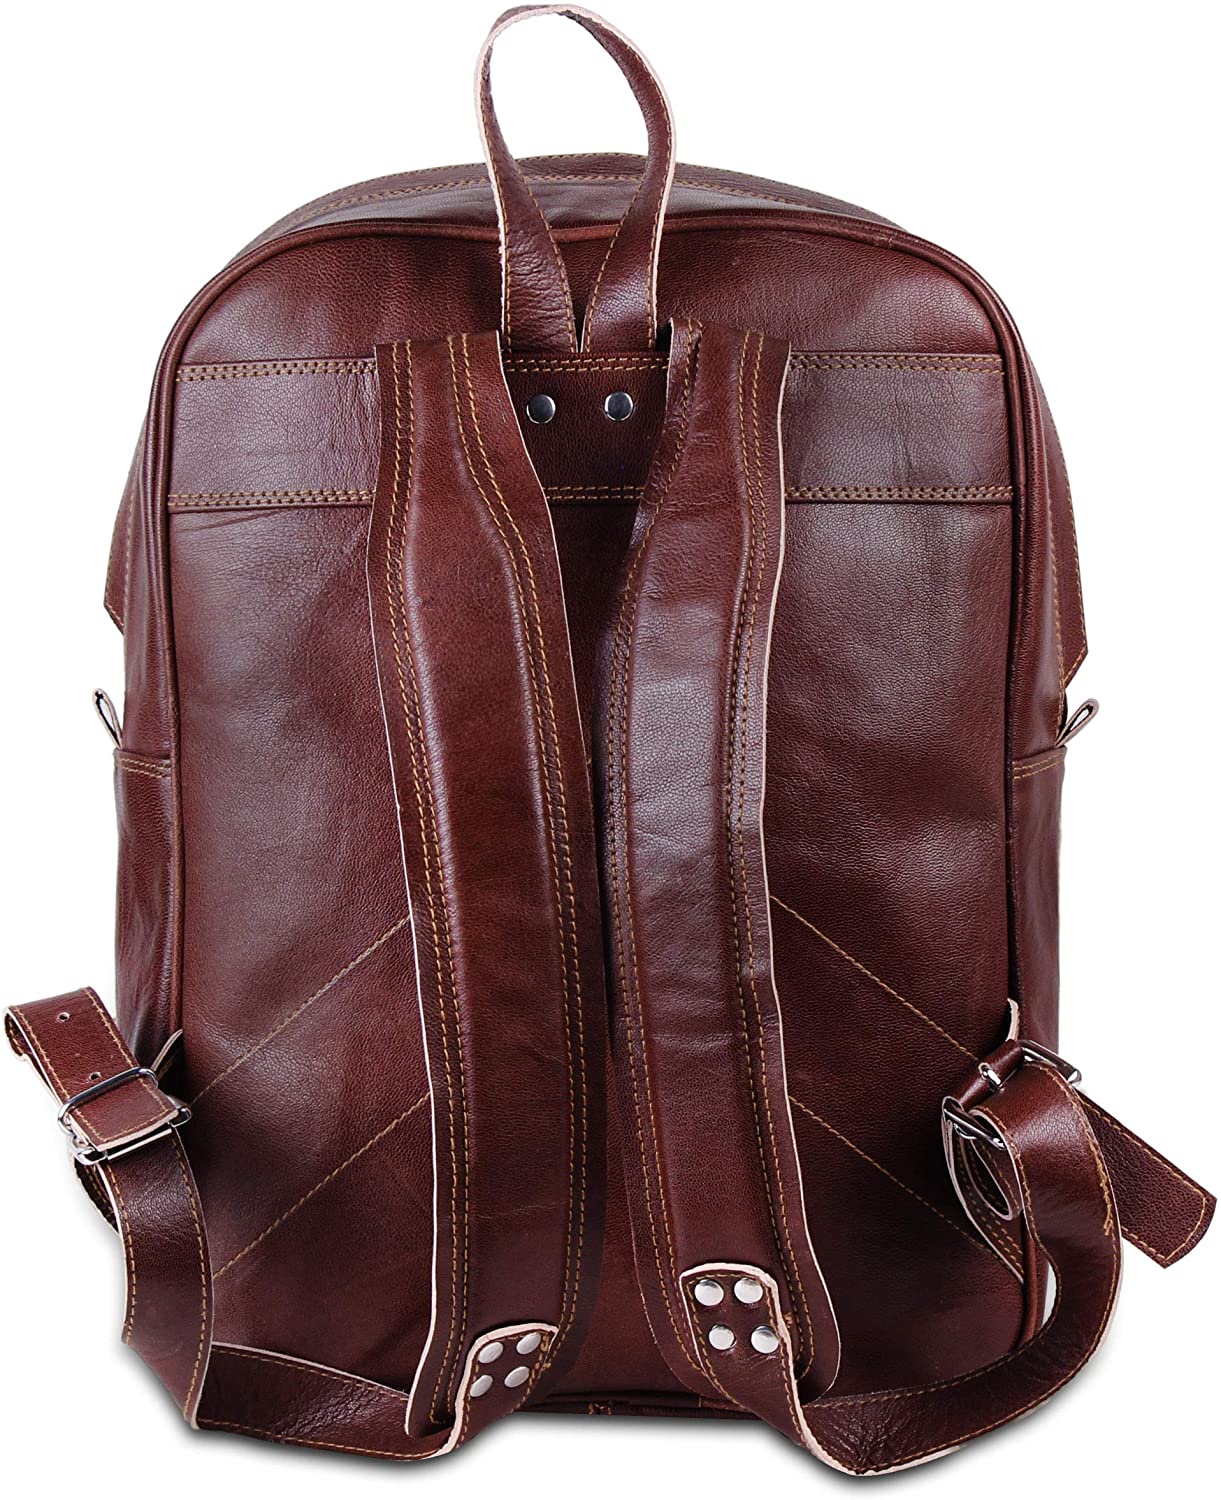 brown lether backpack